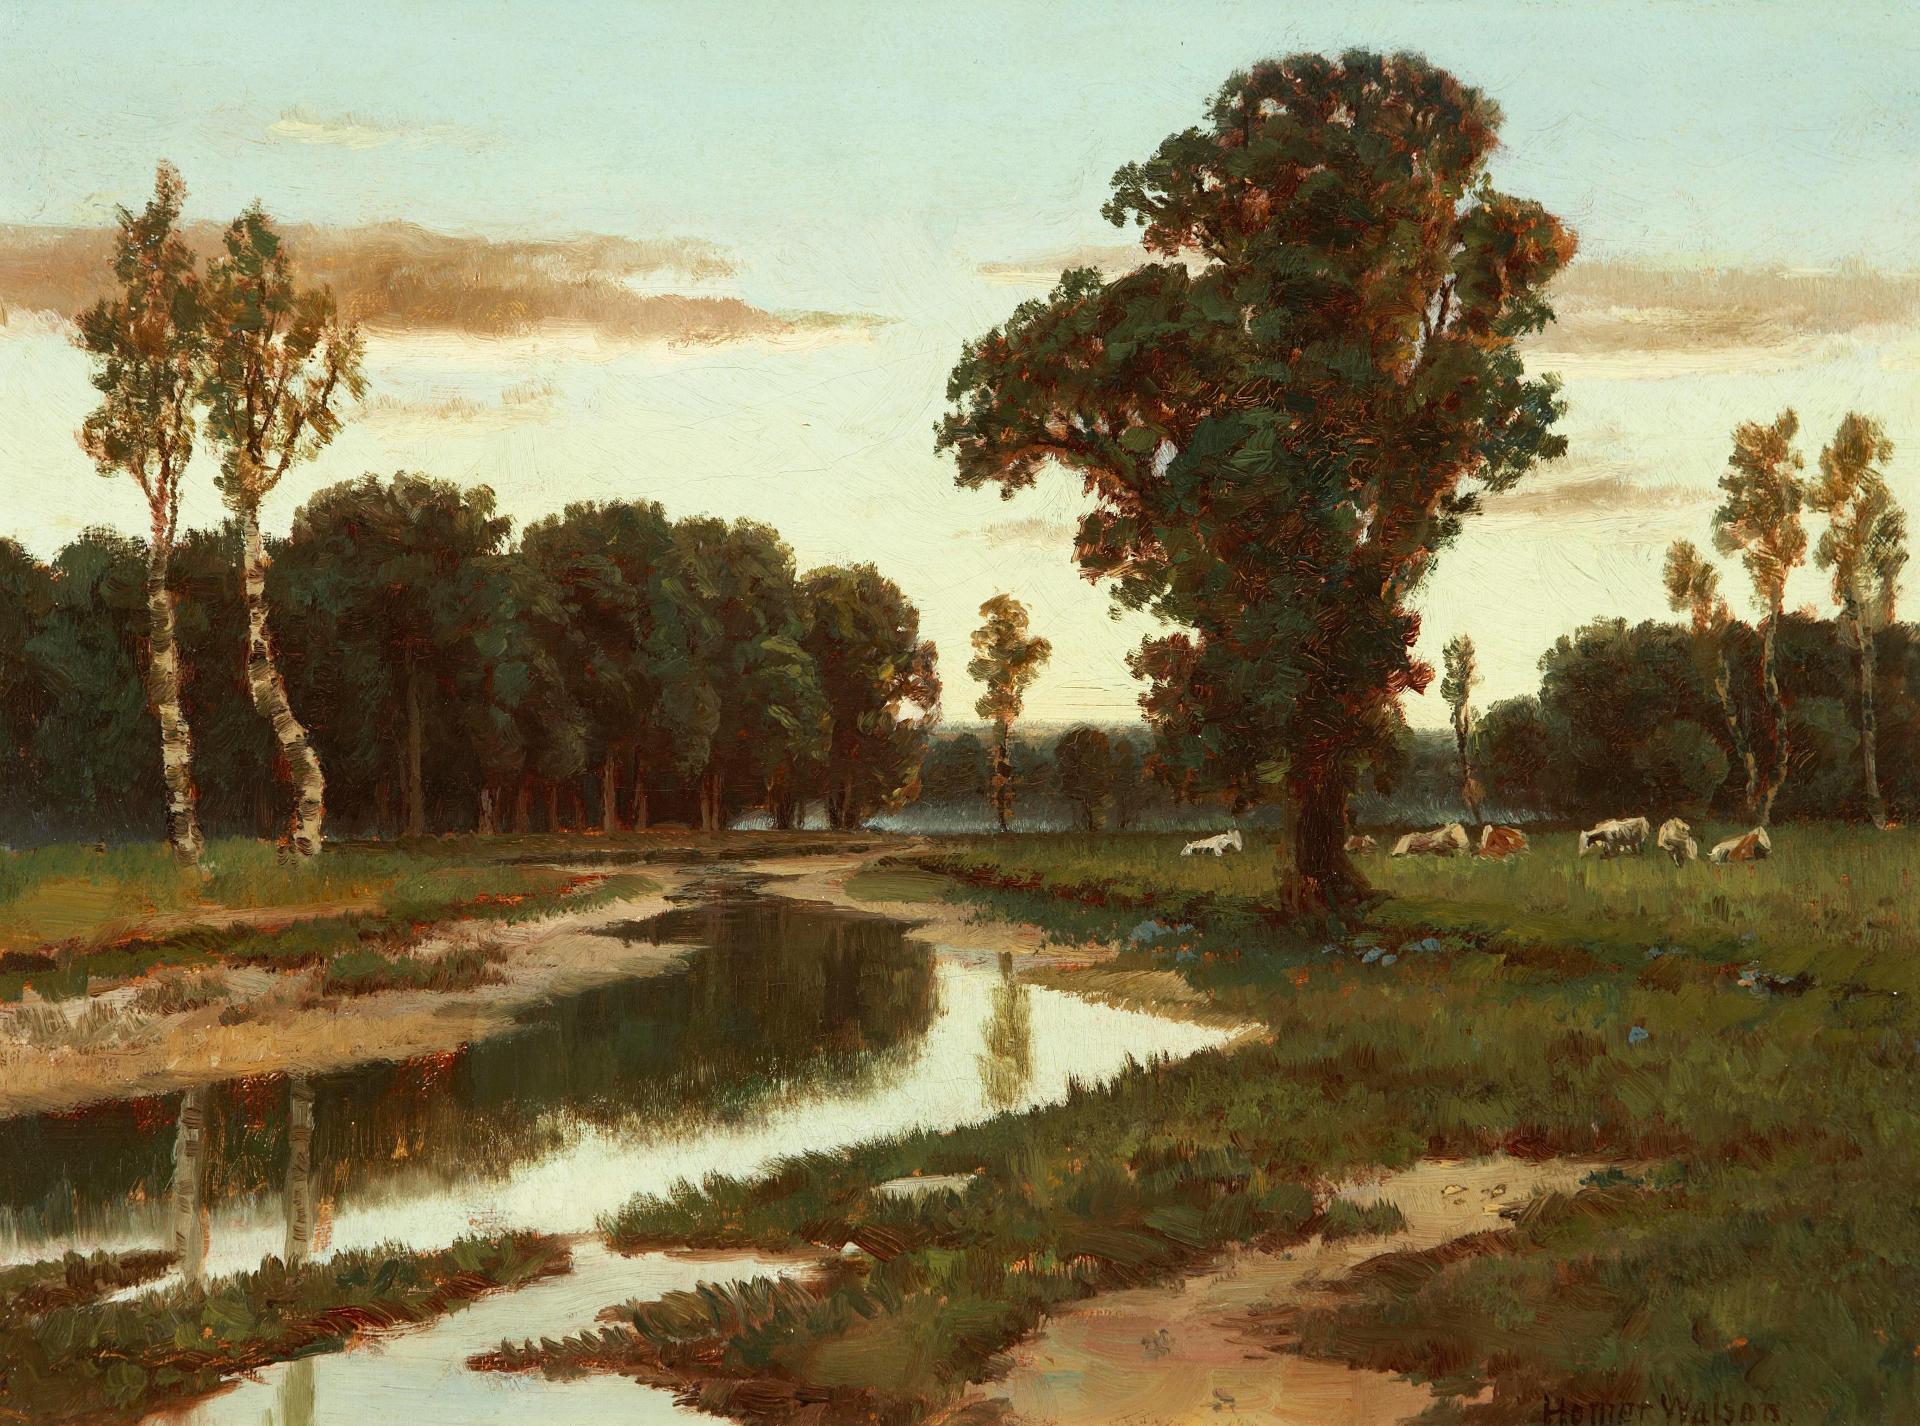 Homer Ransford Watson (1855-1936) - Grazing cattle near the river